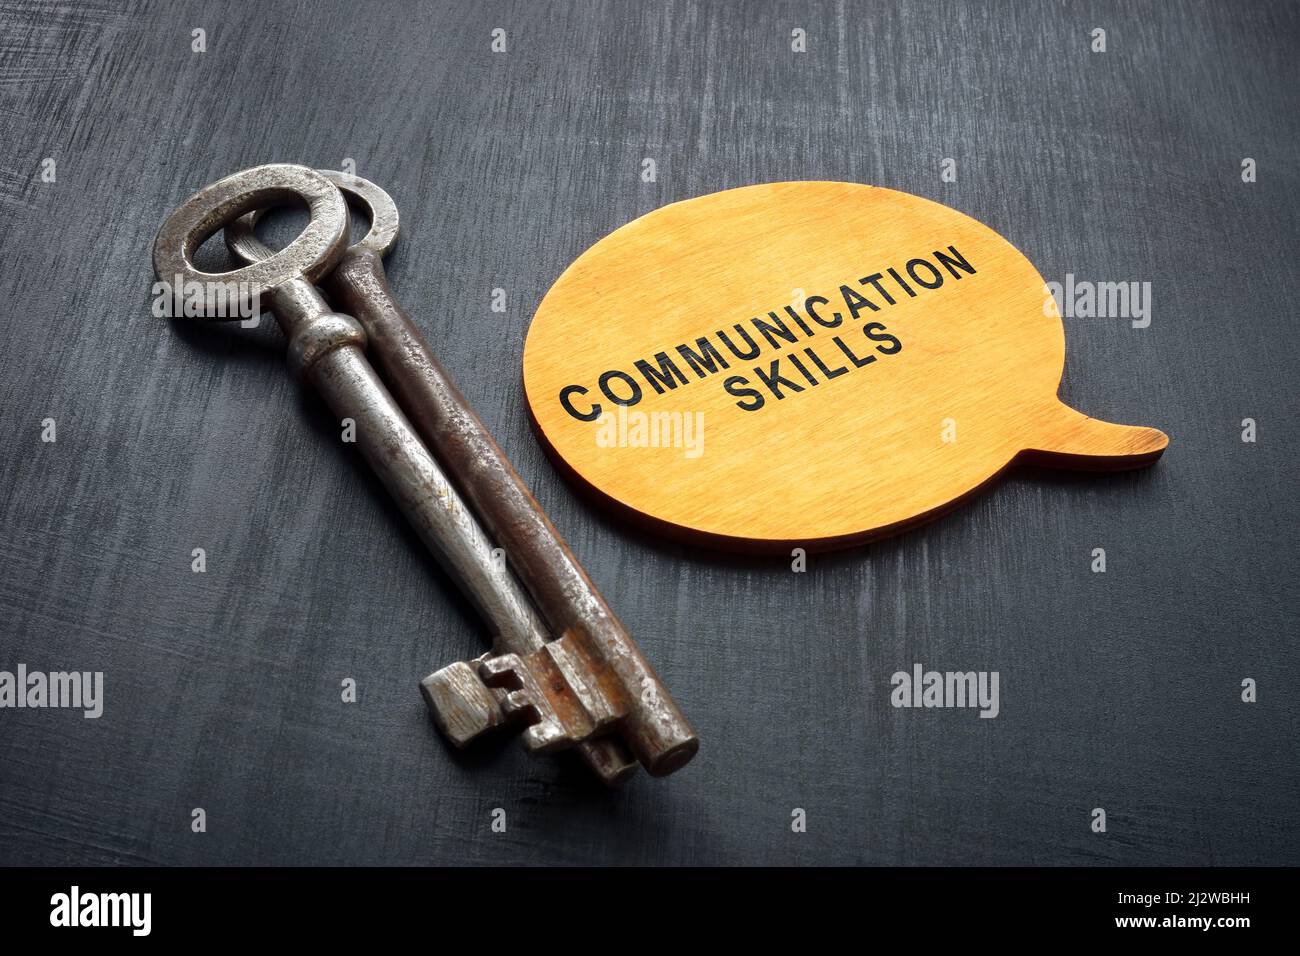 Communication skills concept. Two keys and speech balloon. Stock Photo